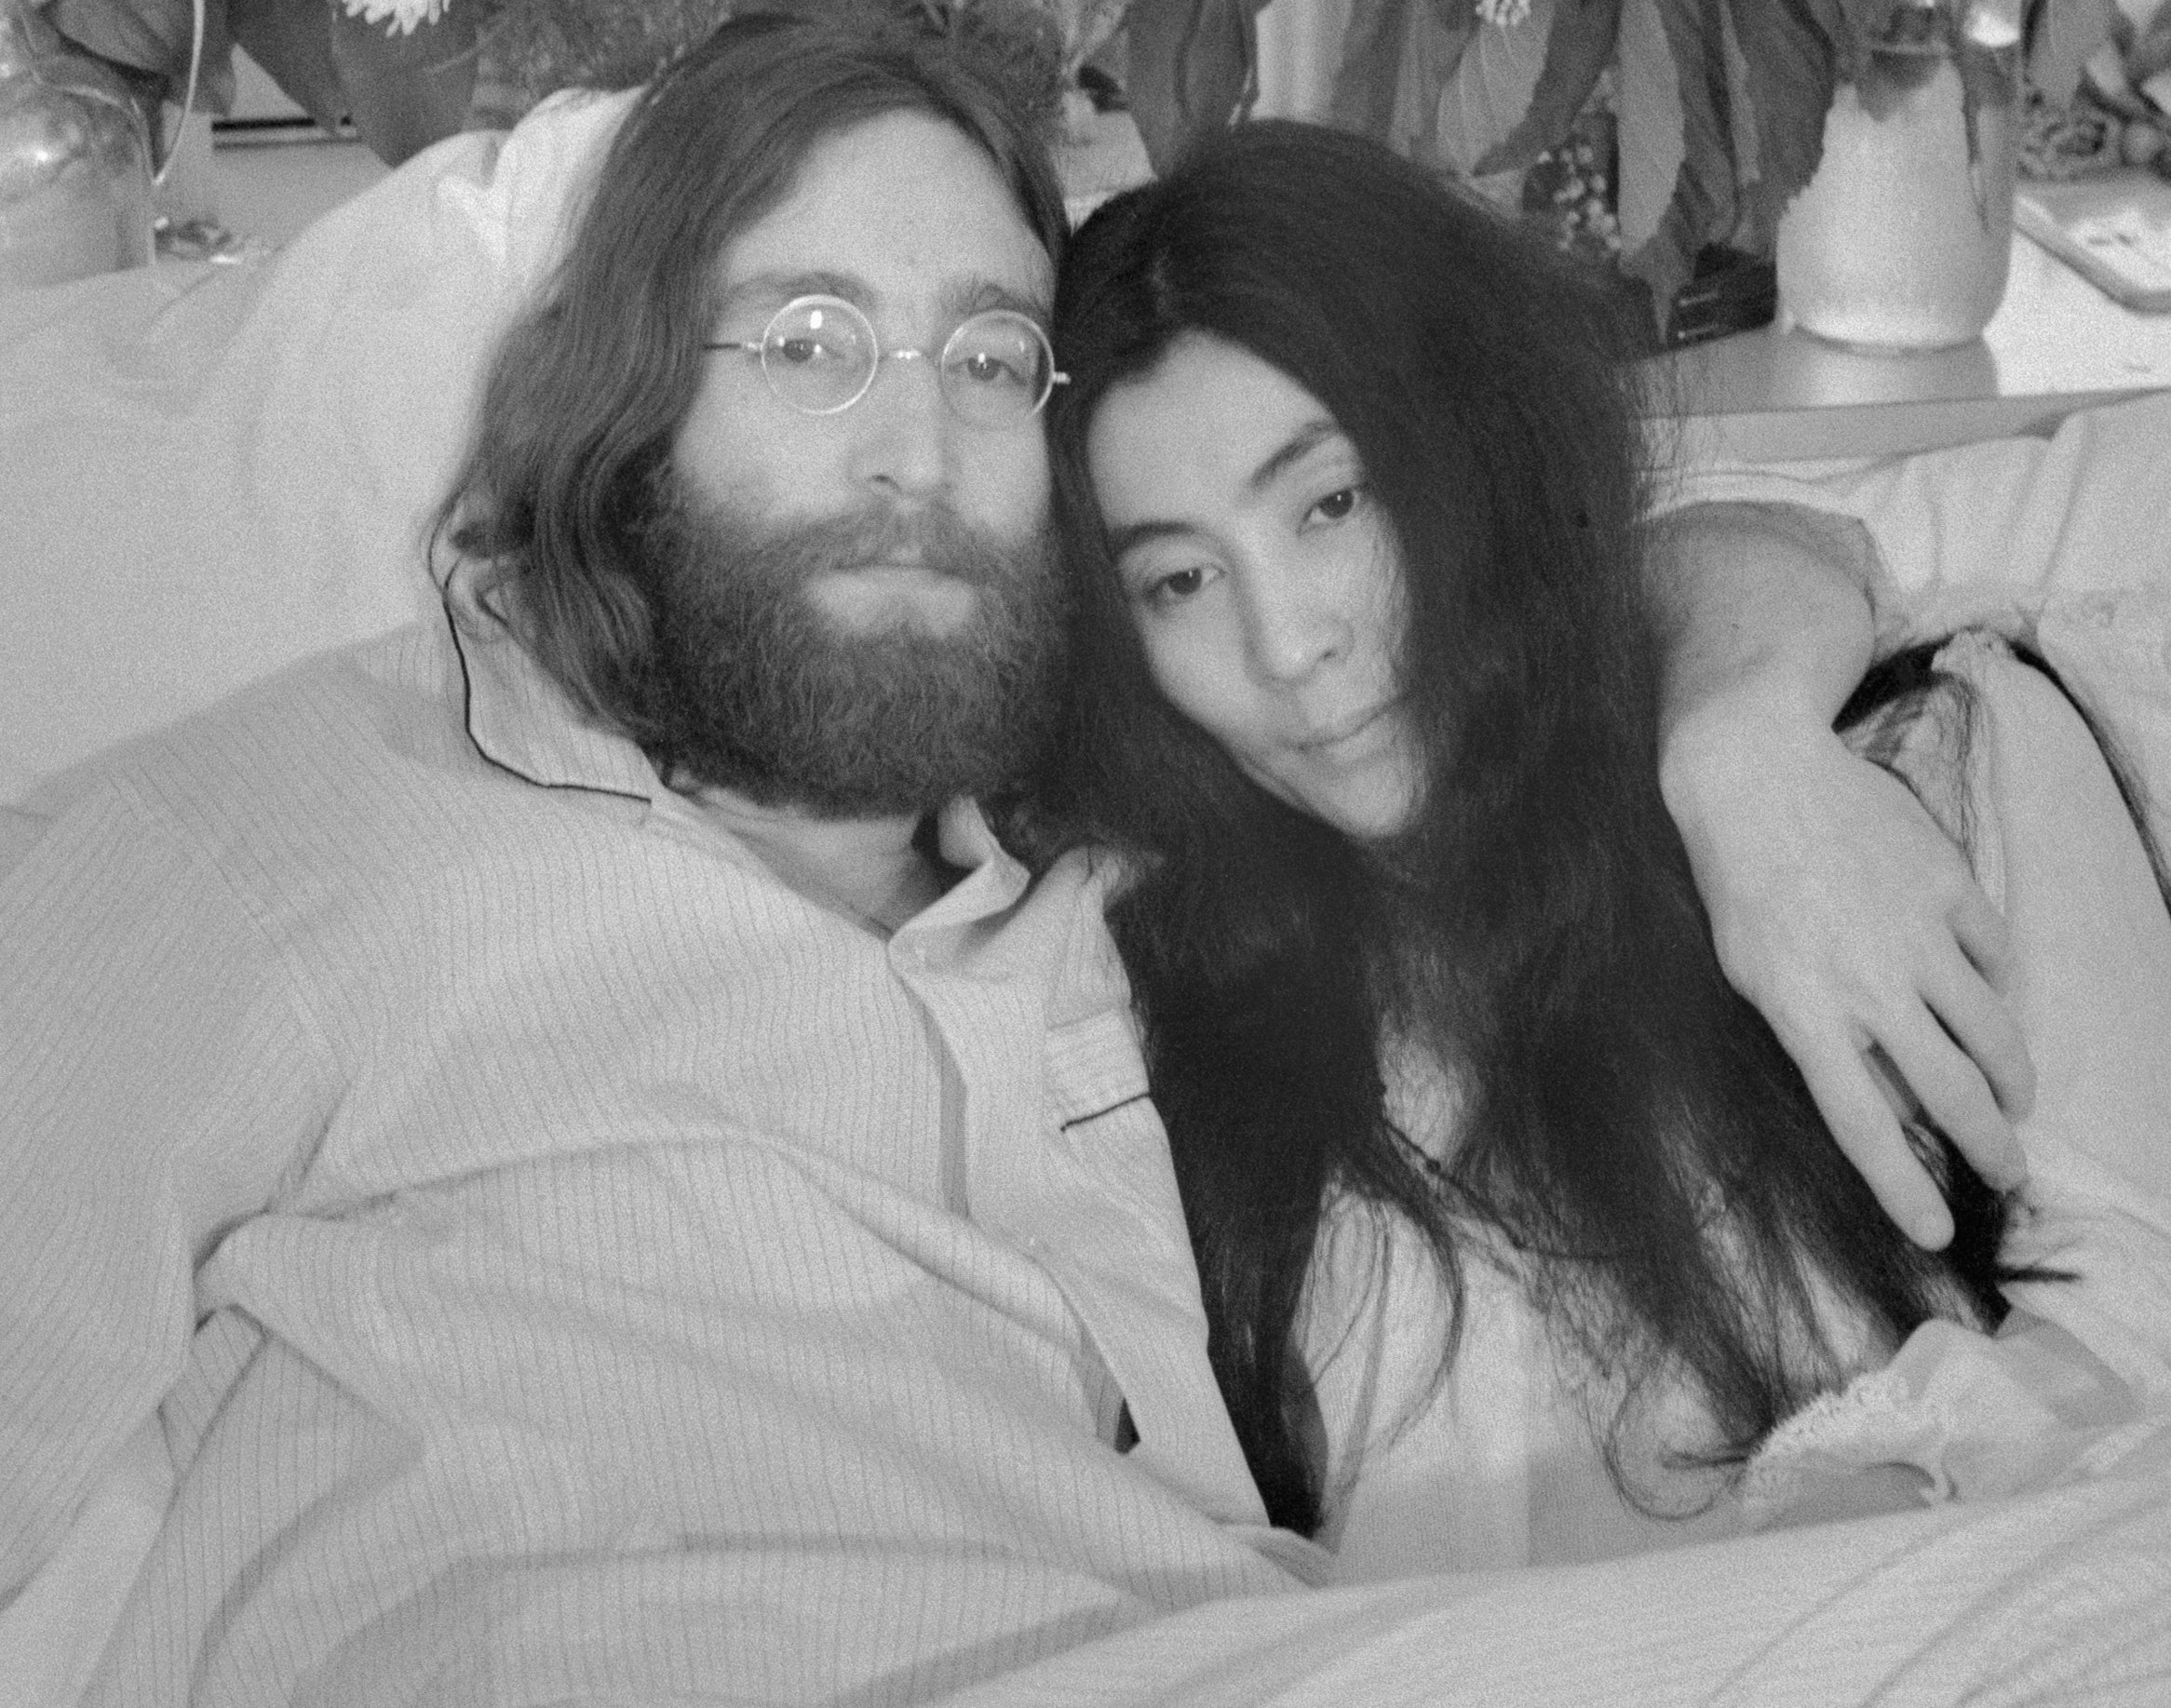 John Lennon and Yoko Ono wearing pajamas